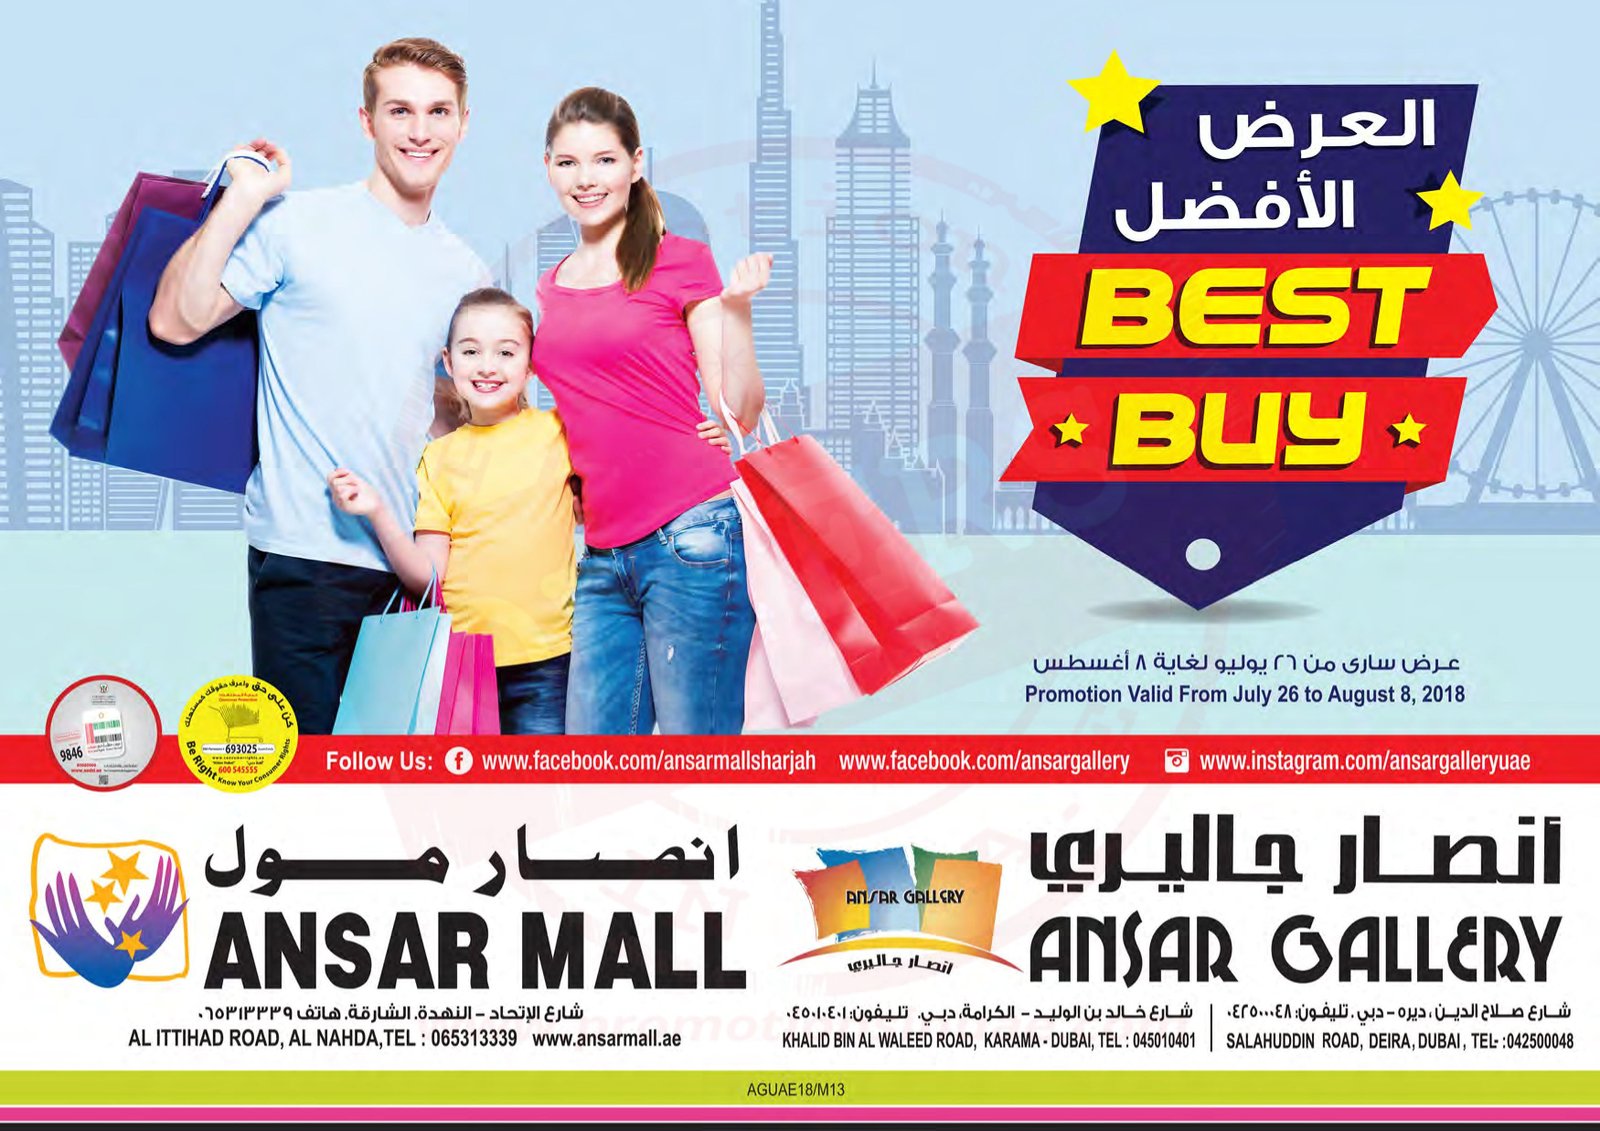 Ansar Mall Ansar Gallery Best Buy Offer